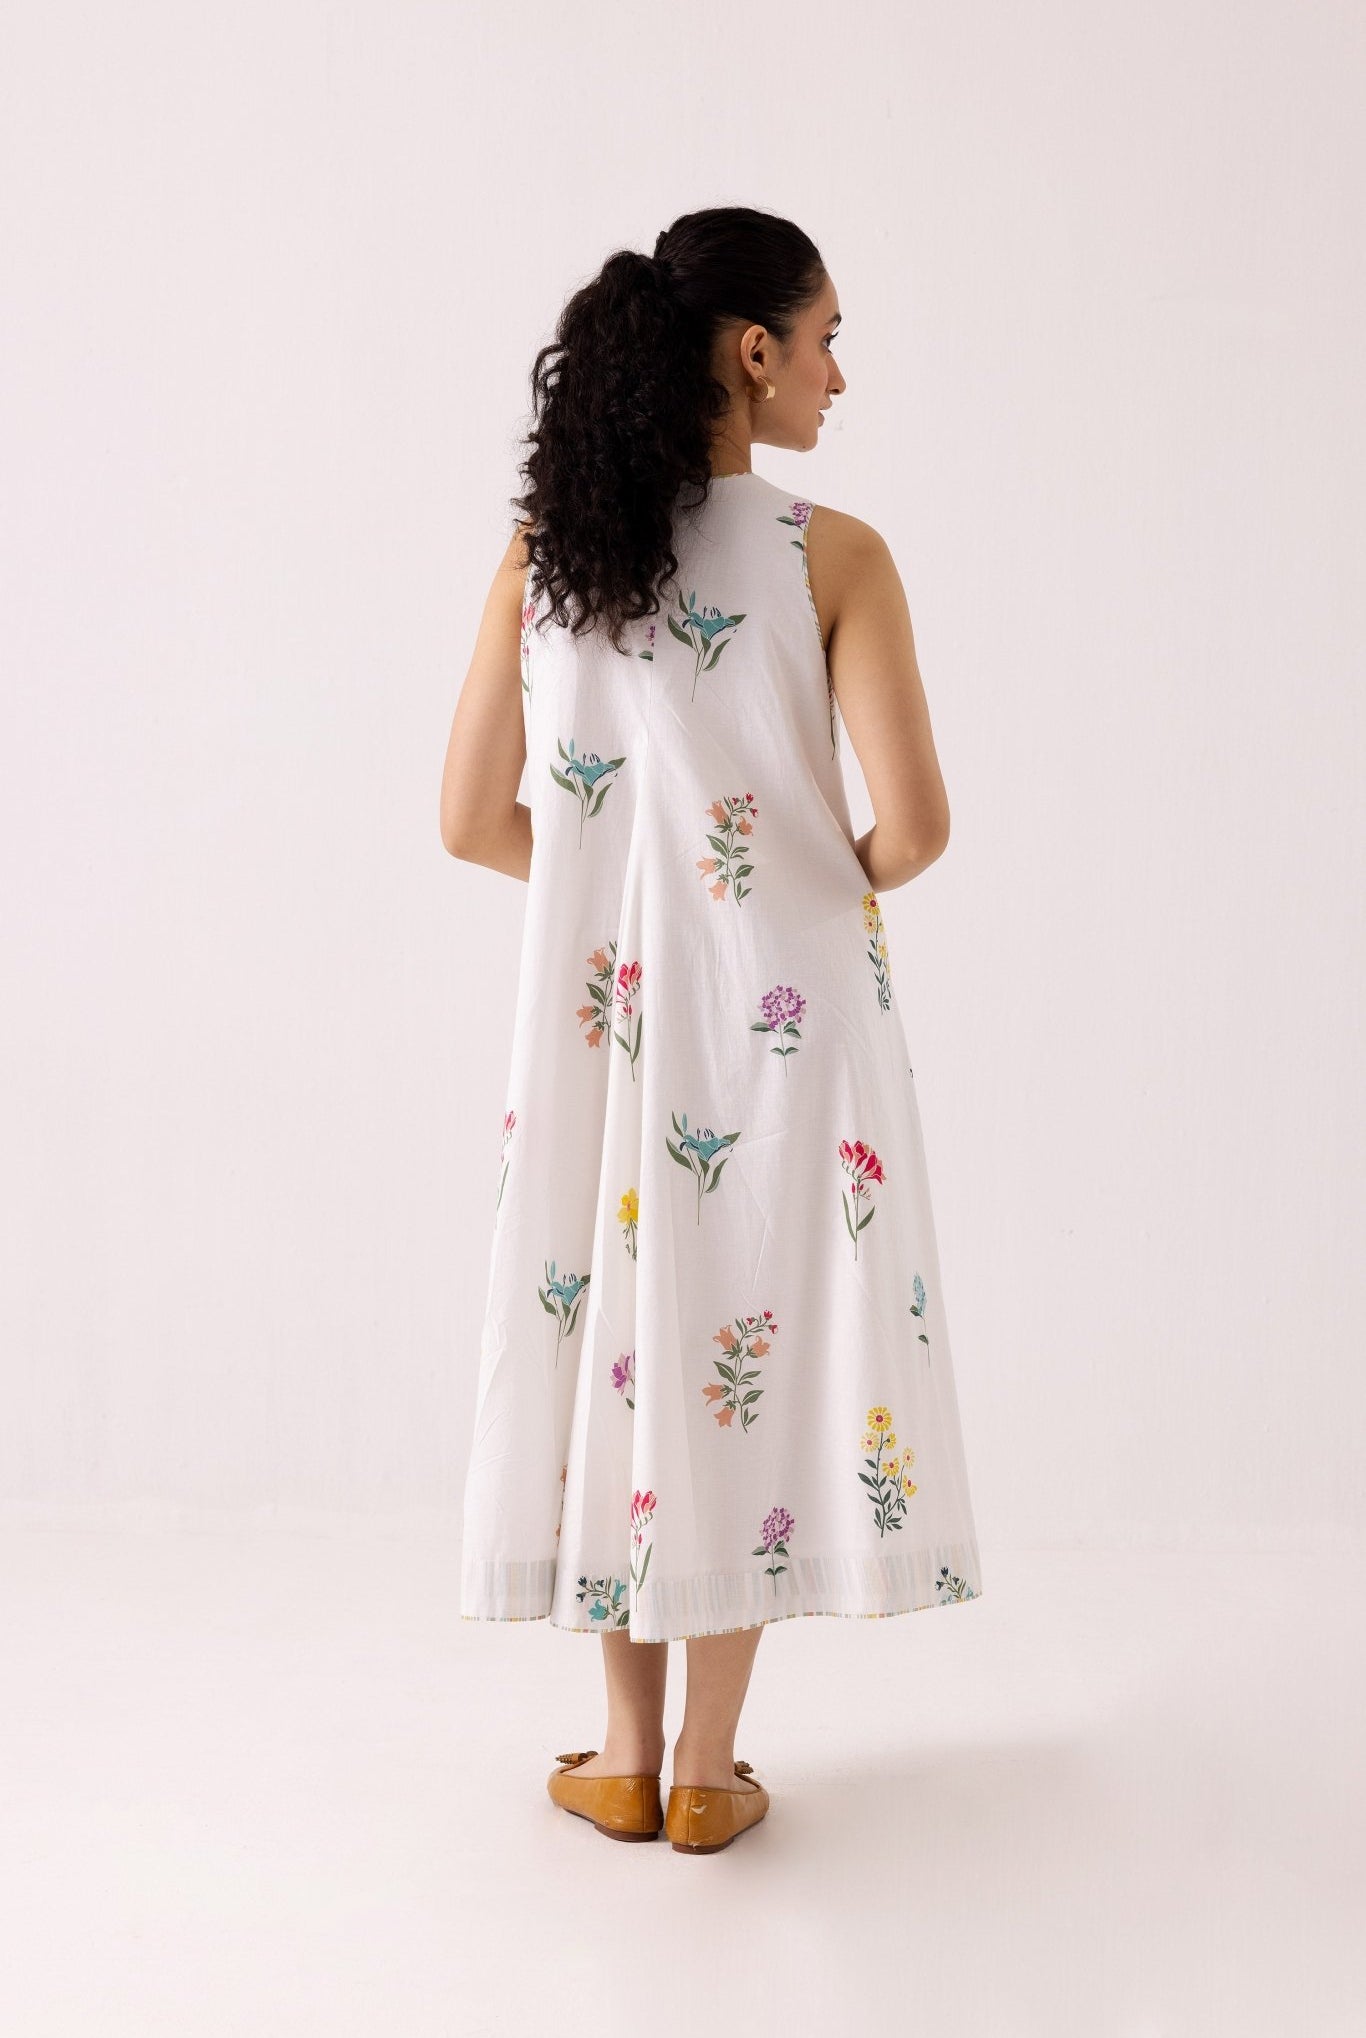 Orchid Dress - White - CiceroniJacket, DressLabel Shreya Sharma